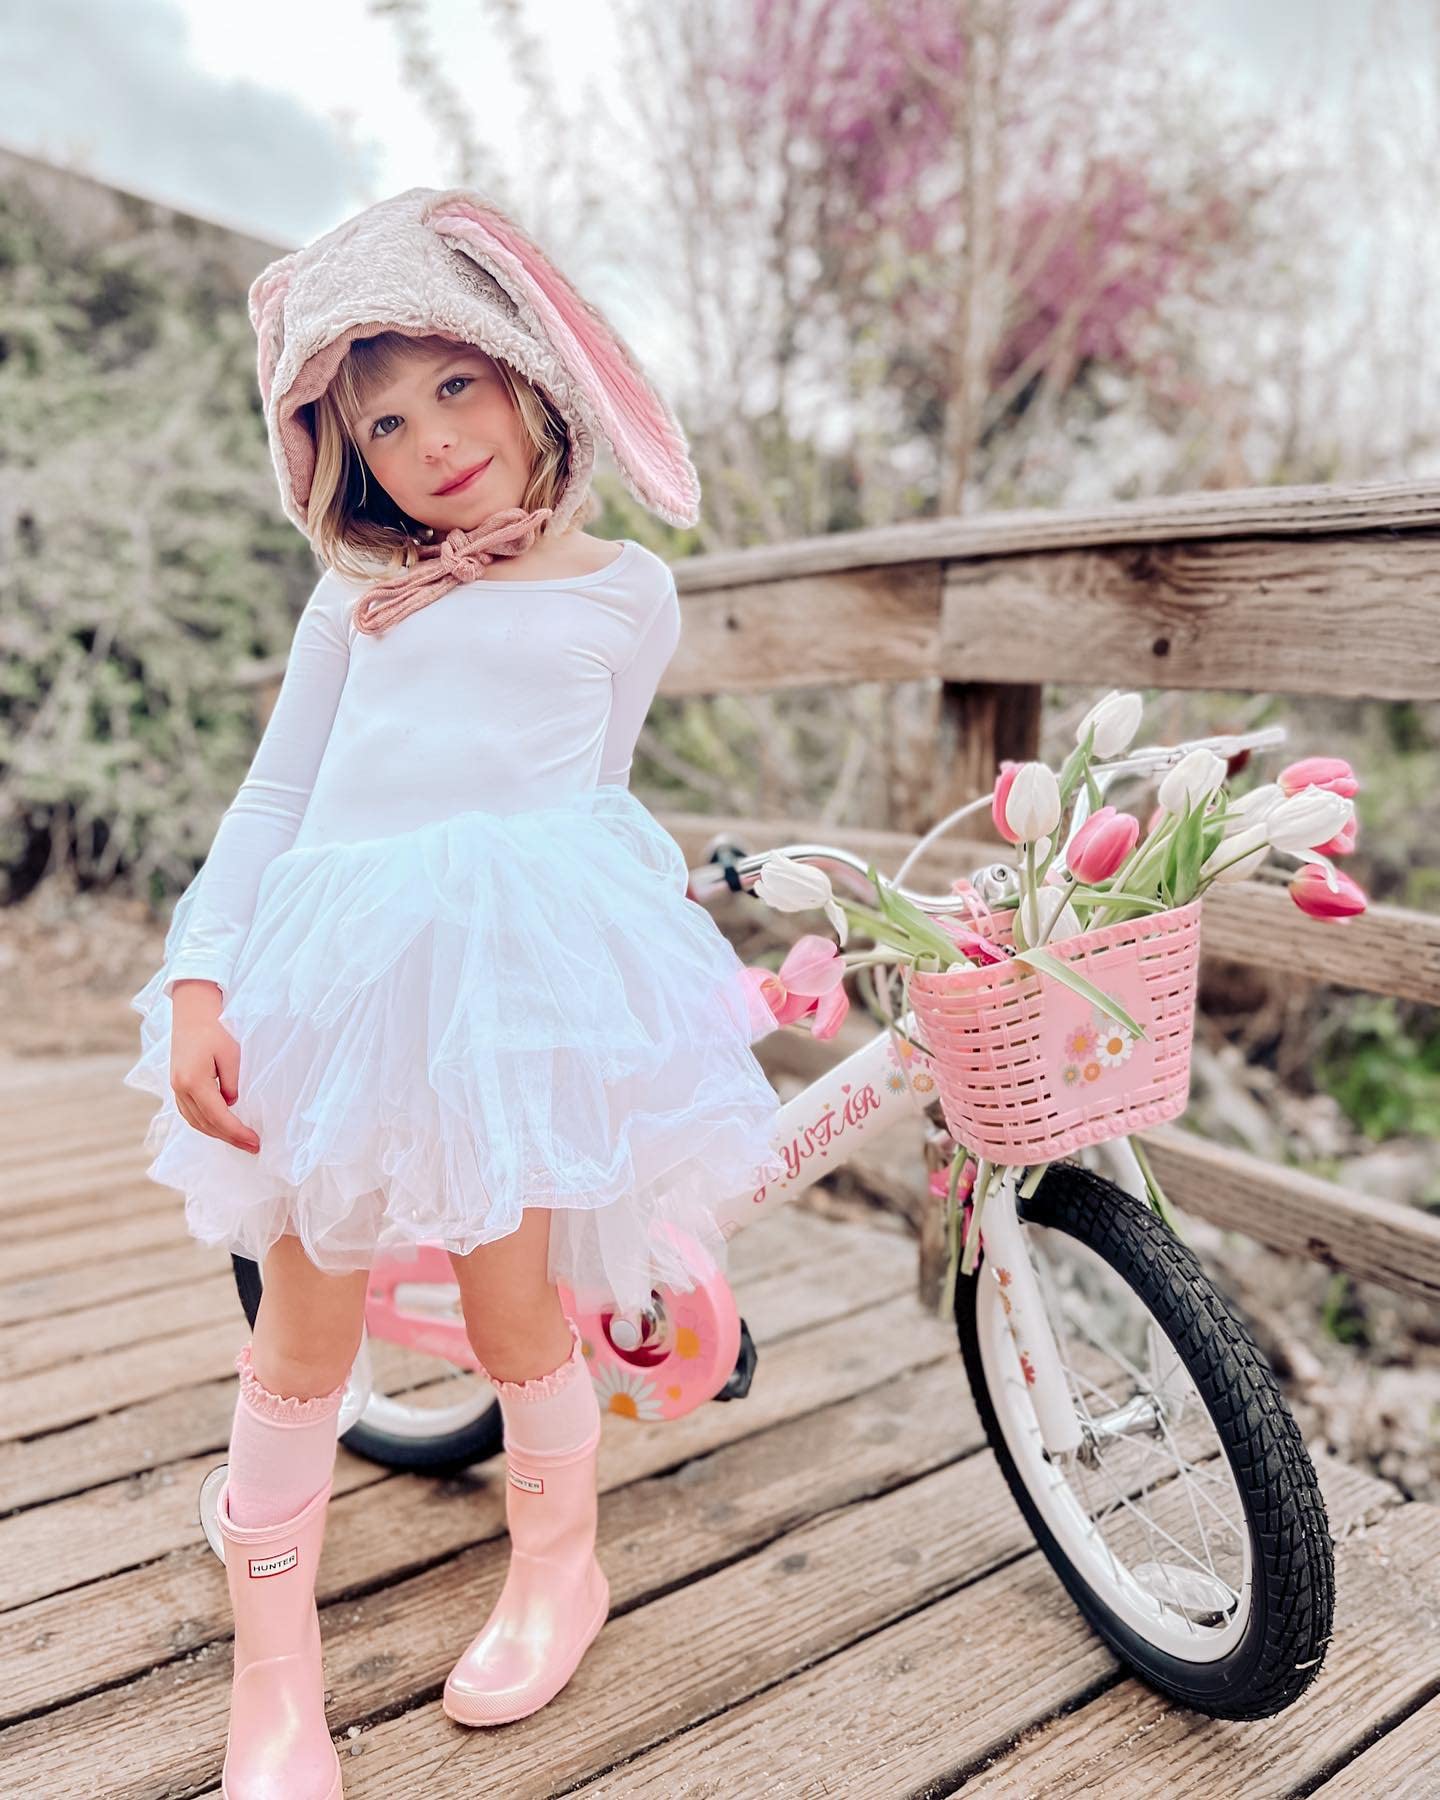 JOYSTAR Little Daisy Kids Bike for 2-7 Years Girls with Training Wheels & Front Handbrake 12 14 16 Inch Princess Kids Bicycle with Basket Bike Streamers Toddler Girl Bikes, Blue Pink White